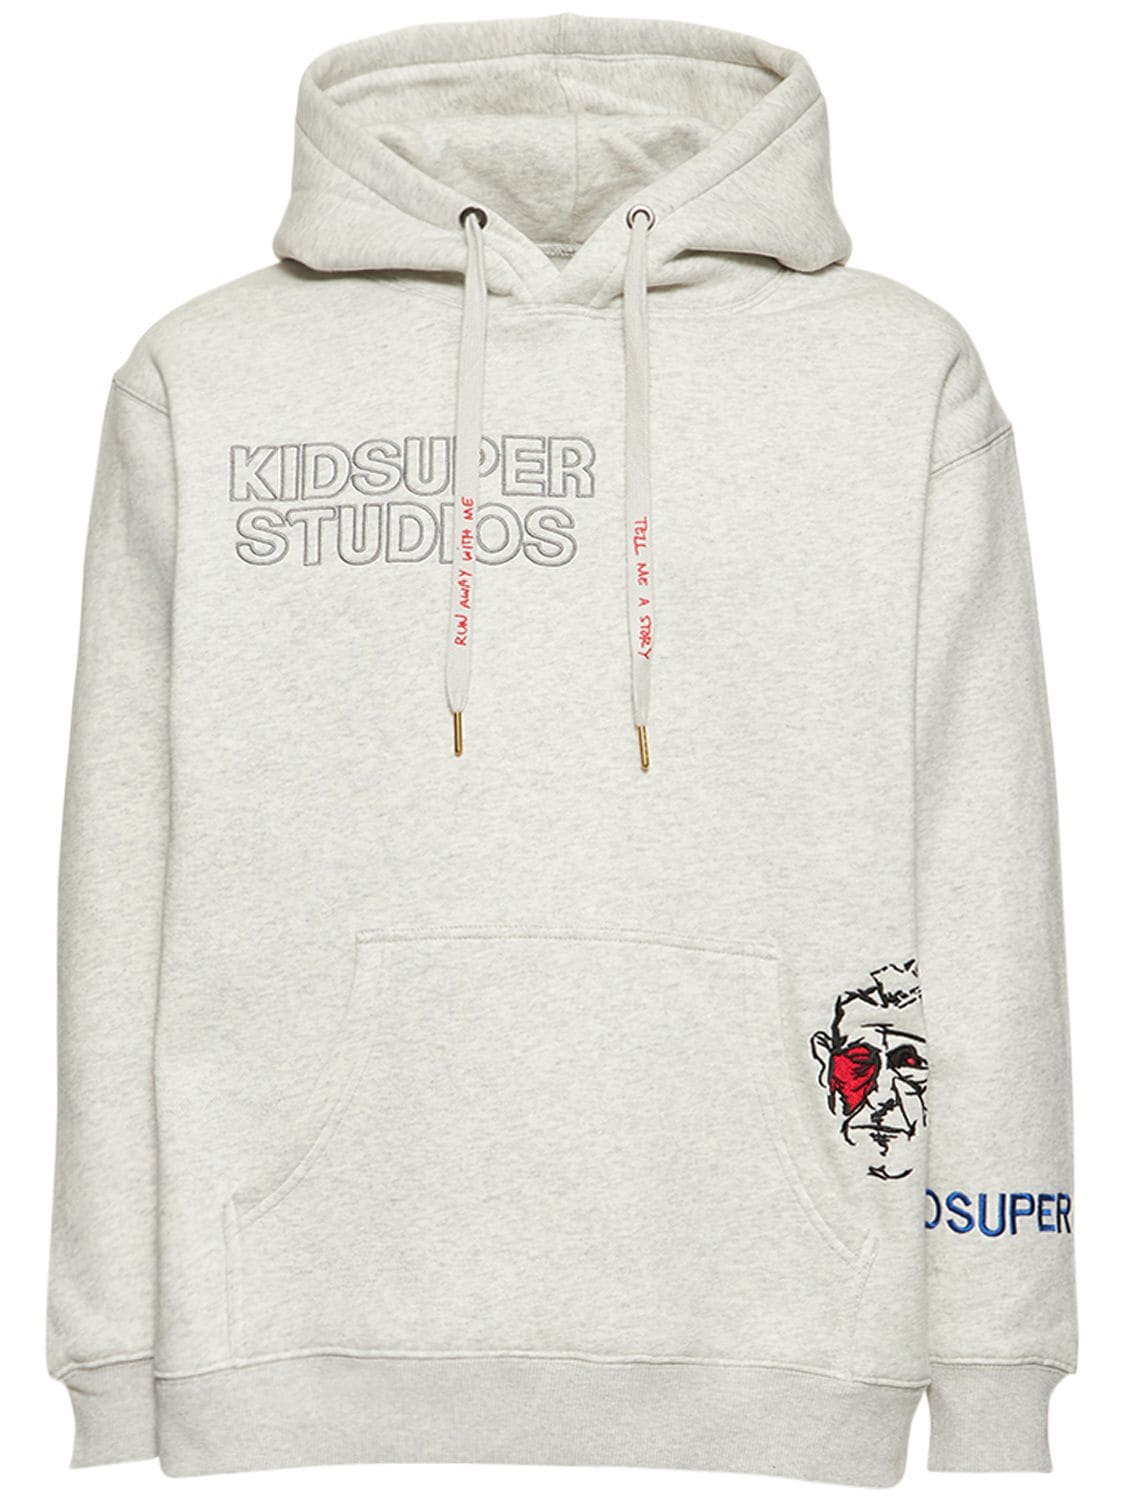 KIDSUPER STUDIOS Limeade Super Sweatshirt